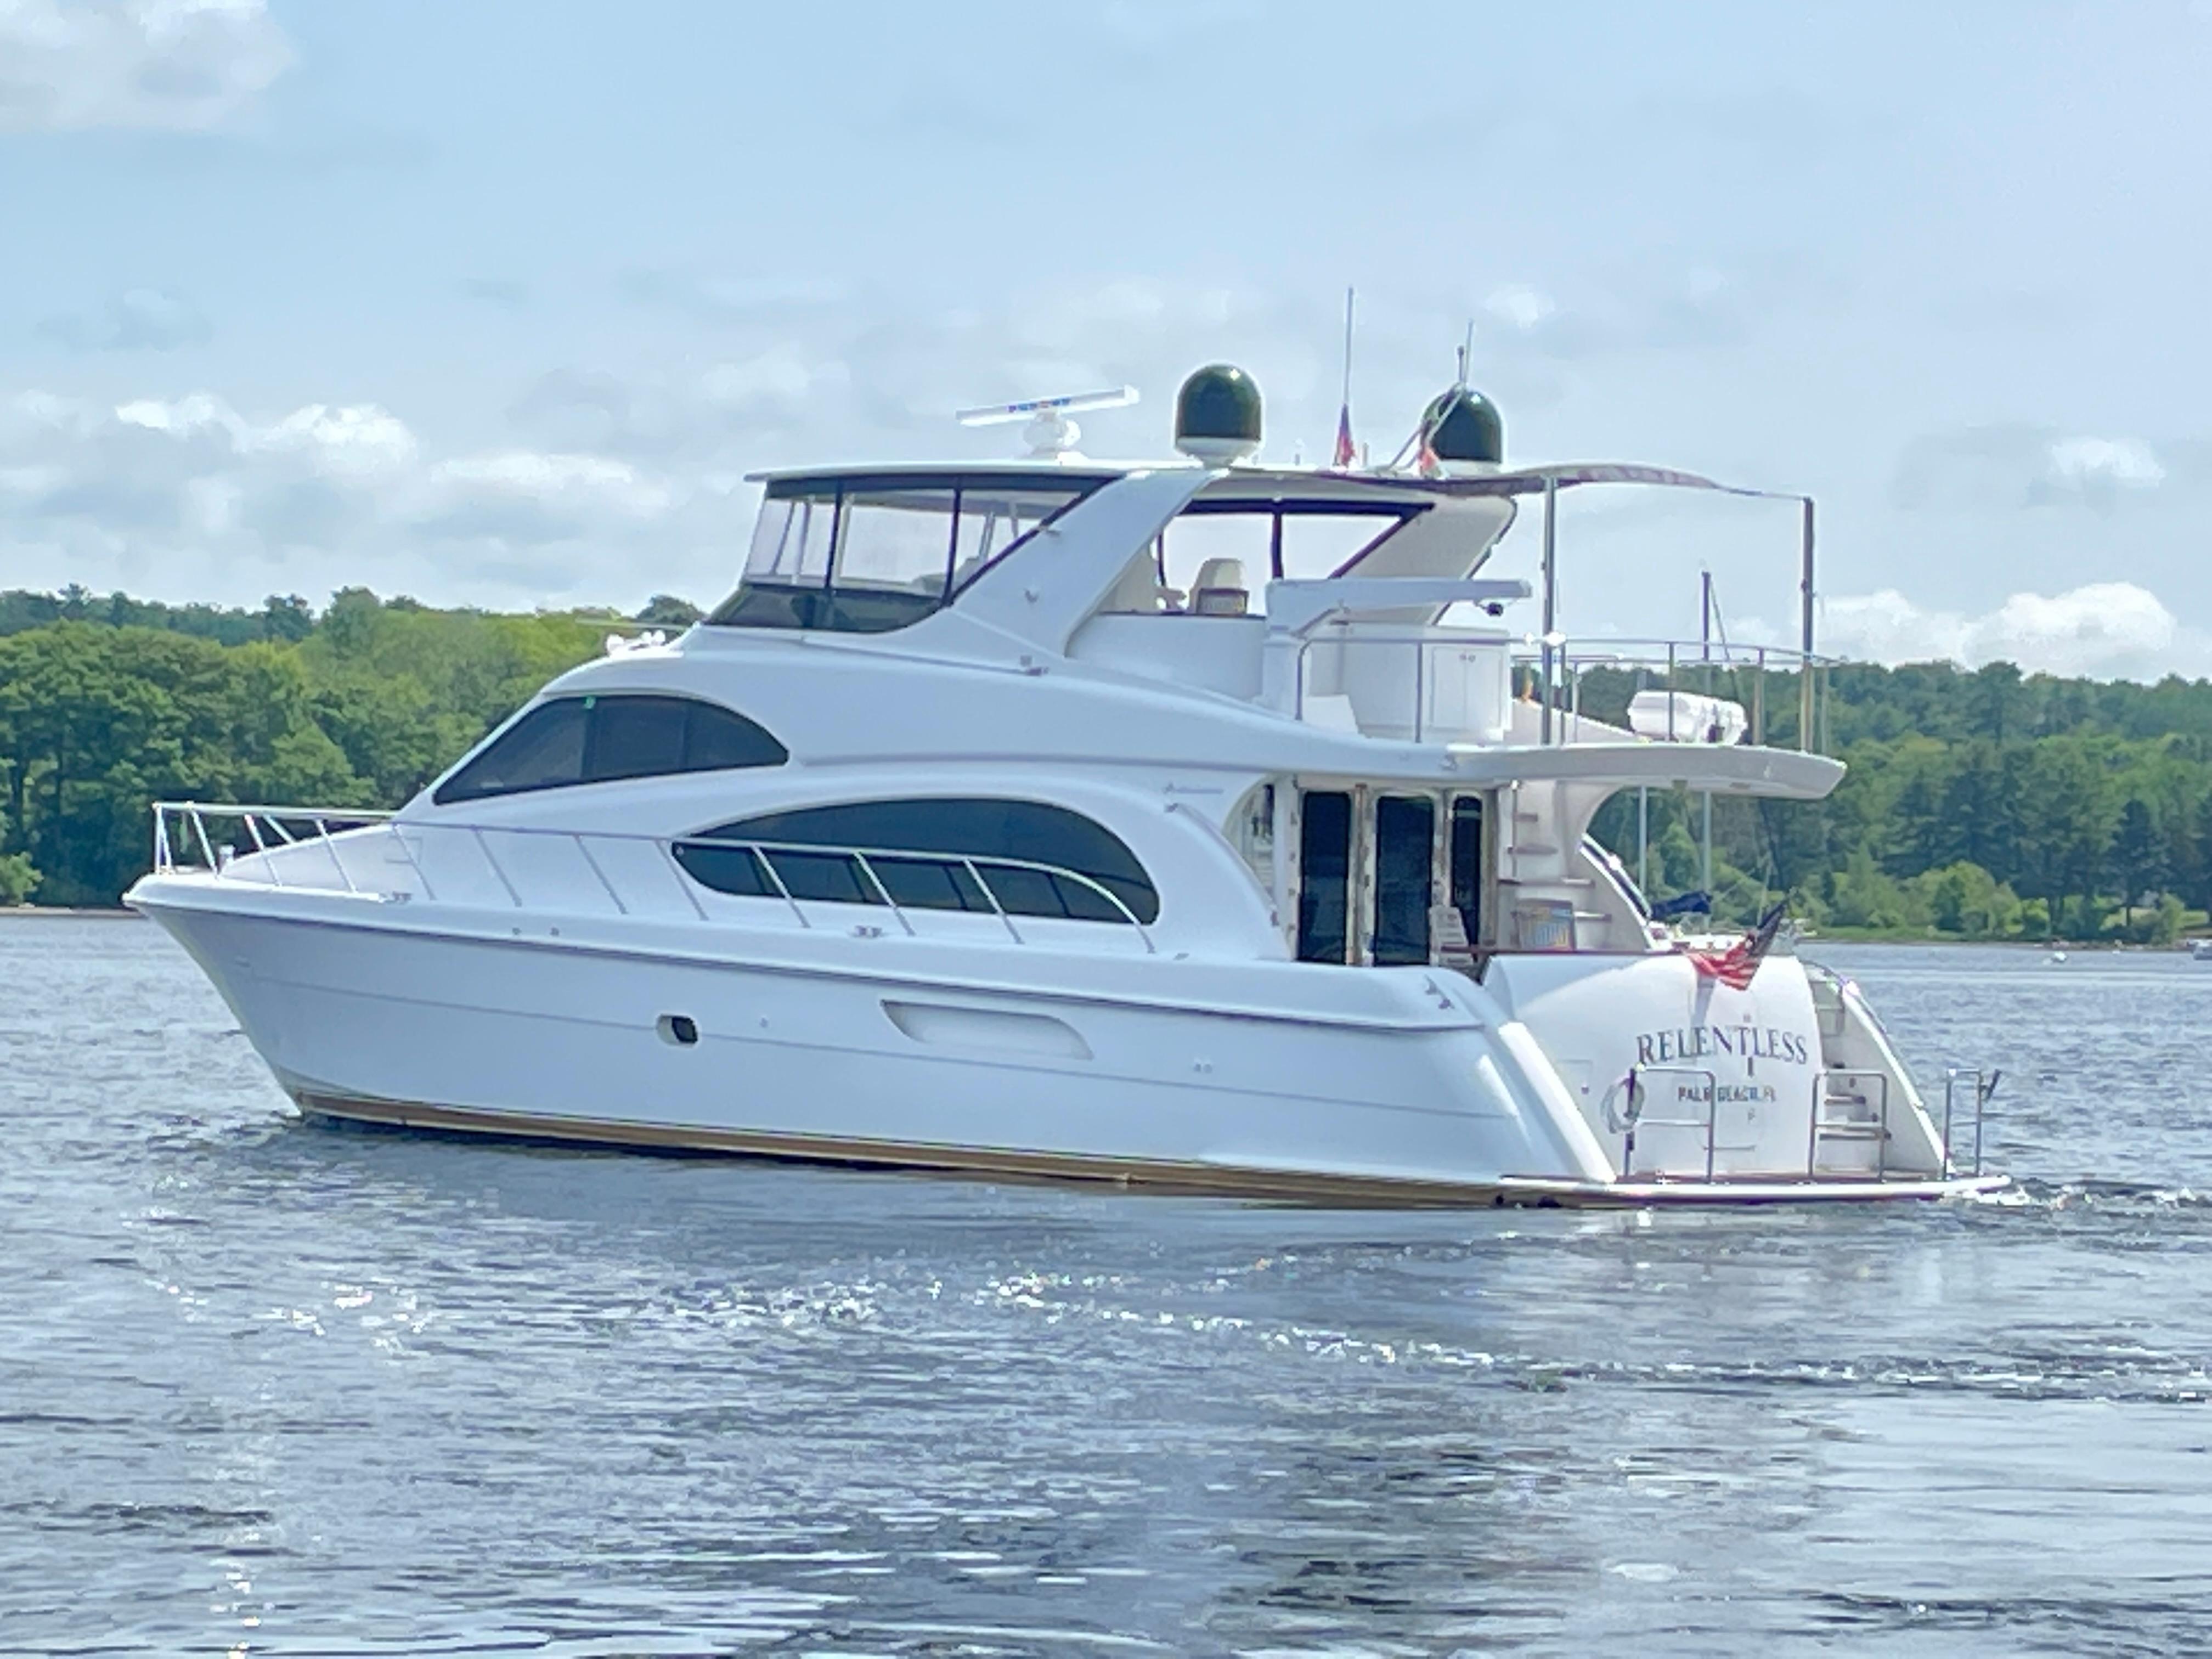 2007 Hatteras 64 Motor Yacht